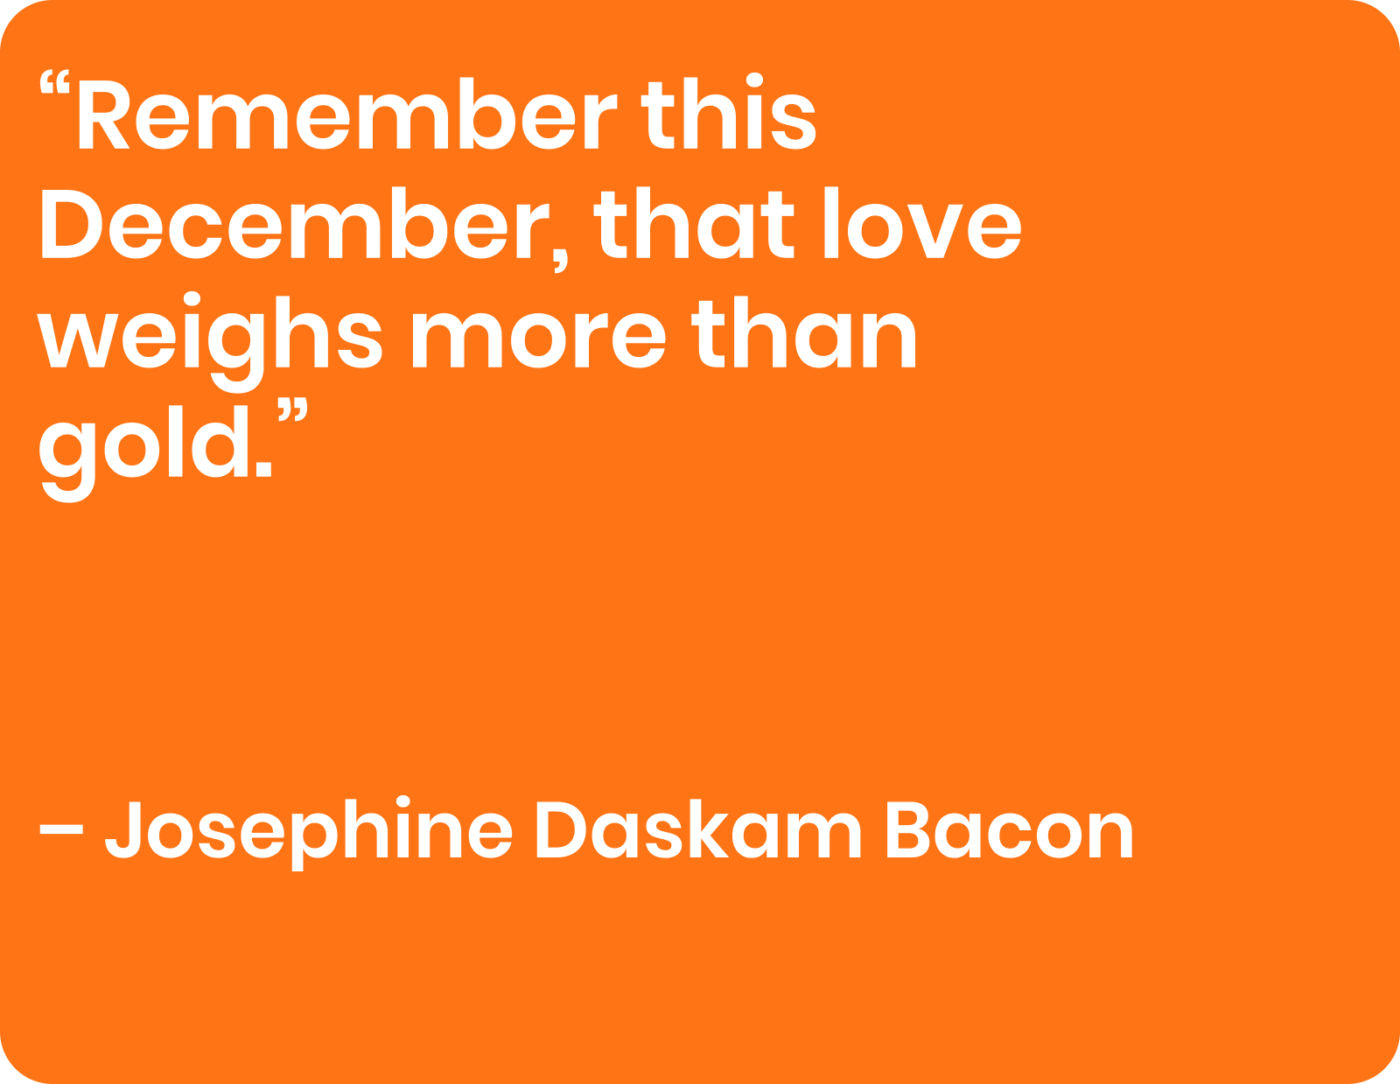 Josephine Daskam Bacon